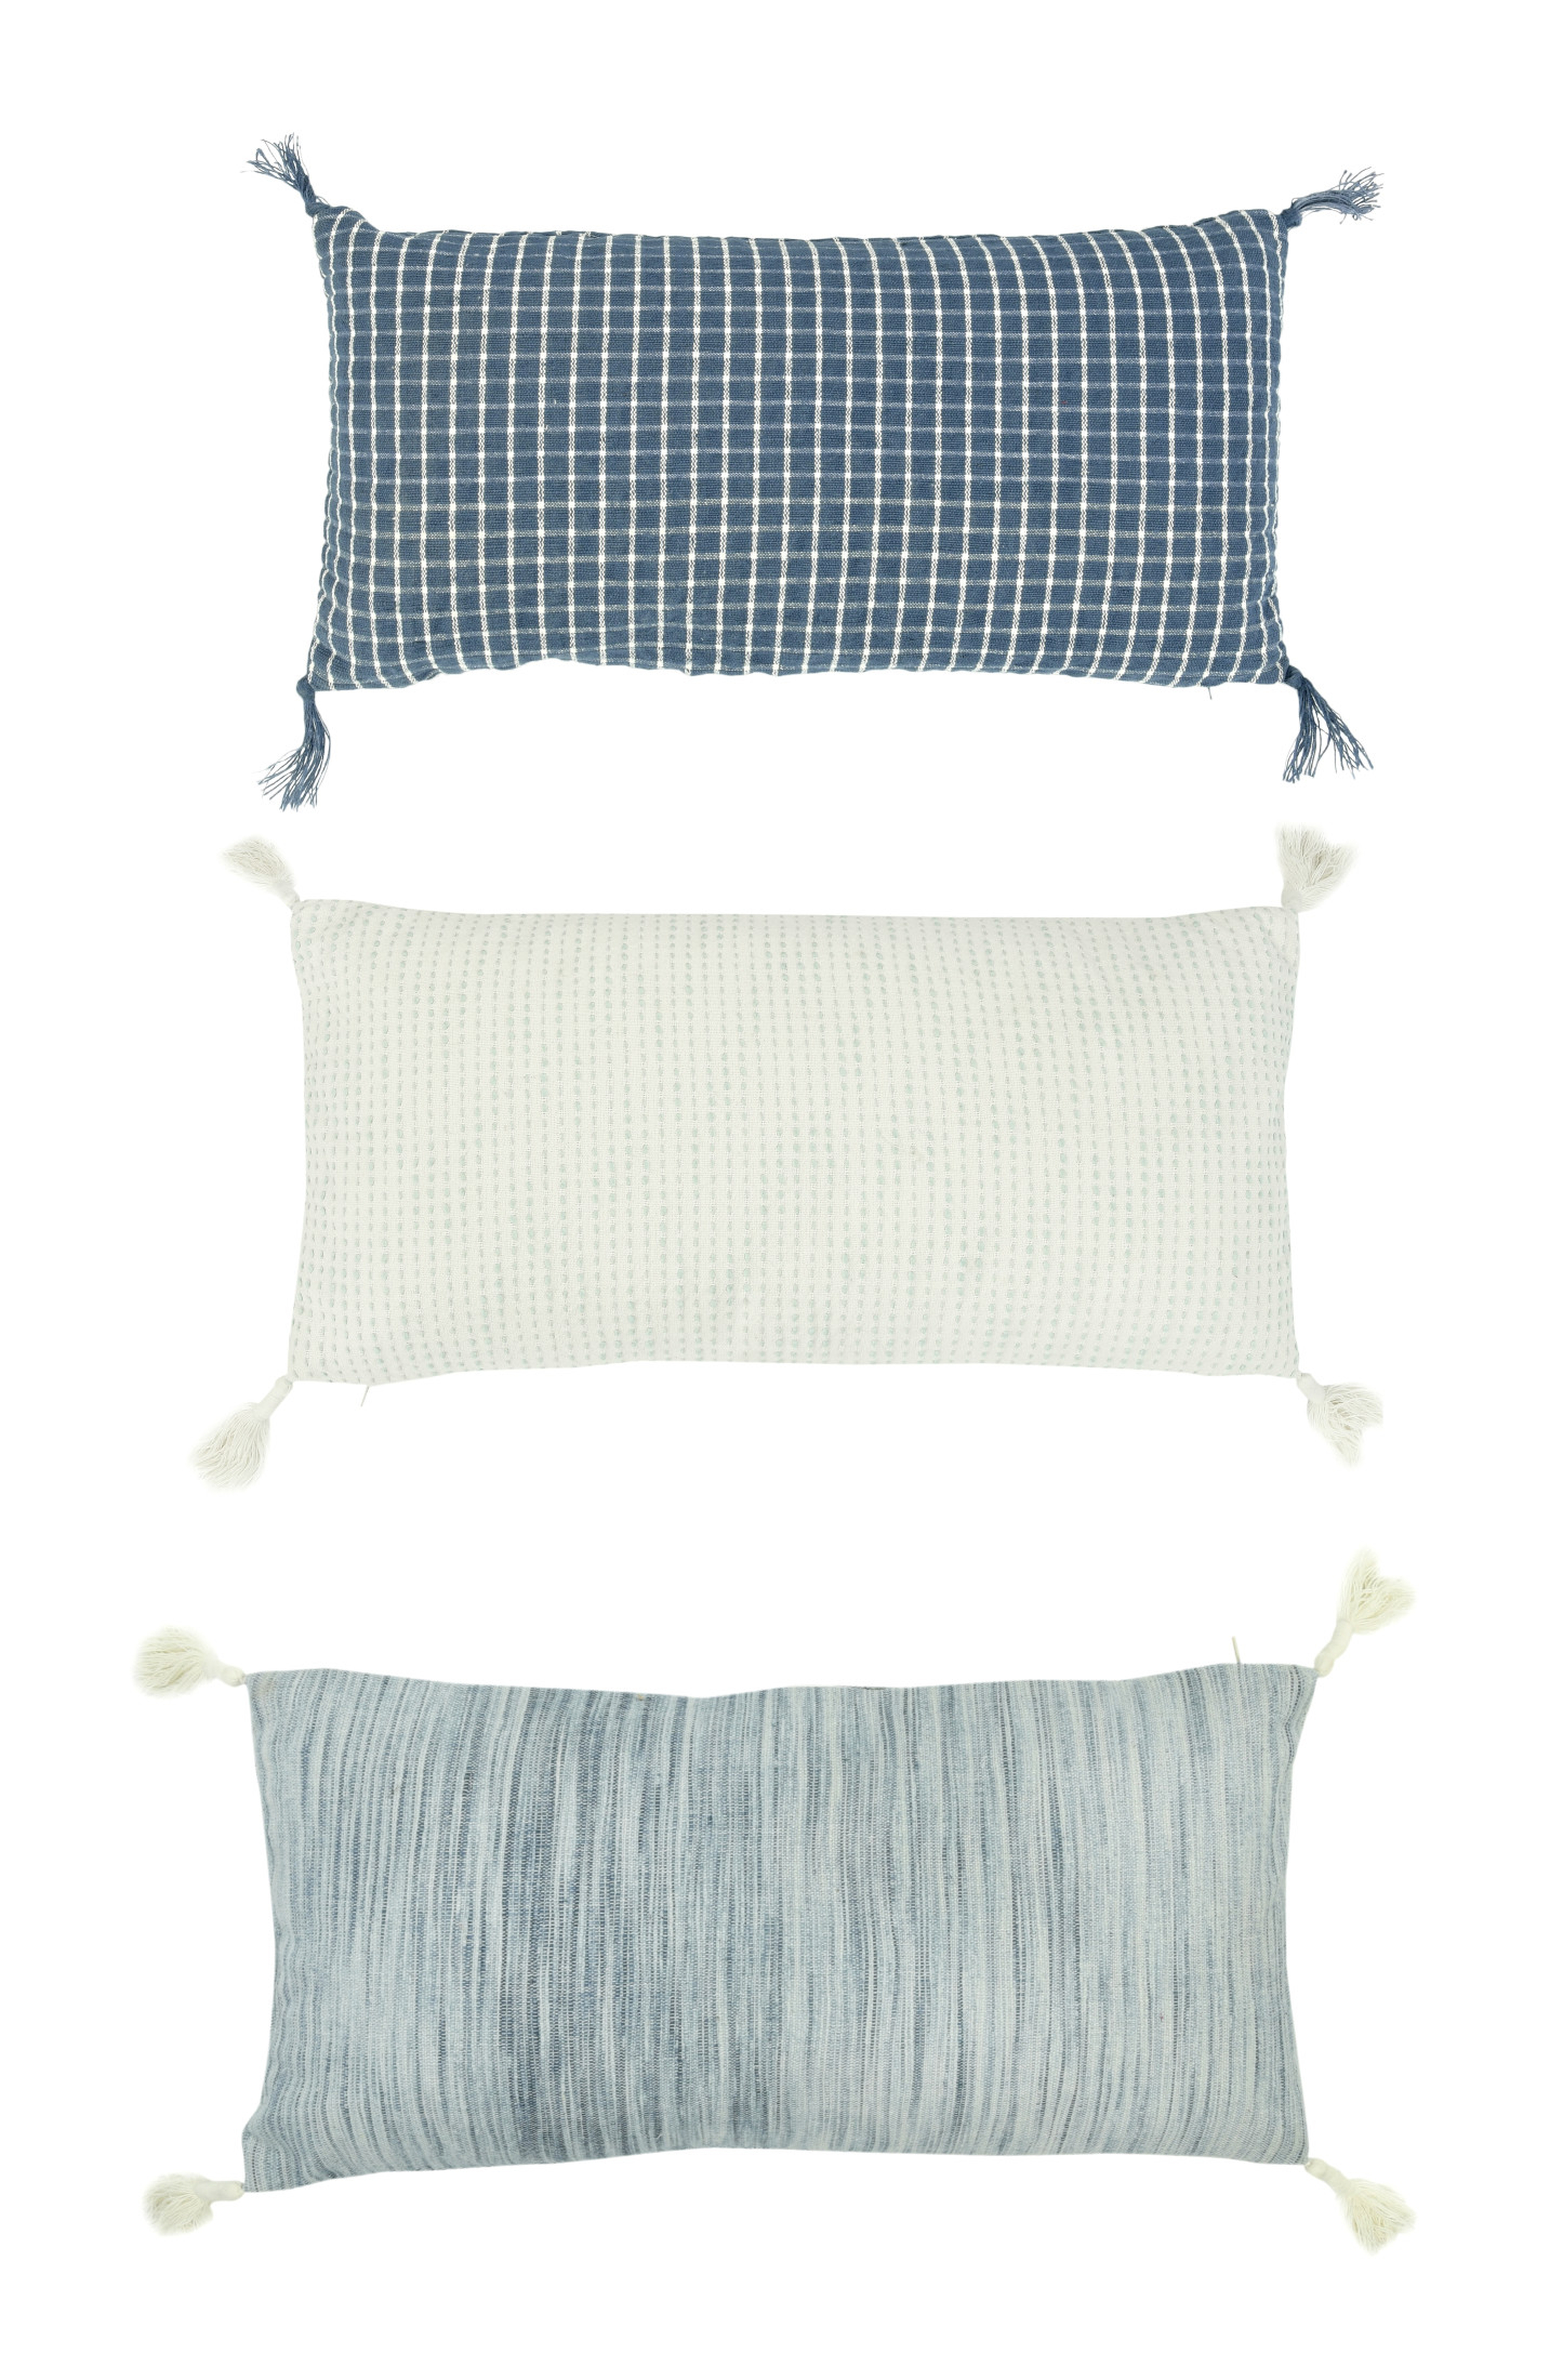 Lumbar Pillows with Tassel Corners, Blue & White Jute & Cotton, Set of 3, 24" x 12" - Creative Co-Op